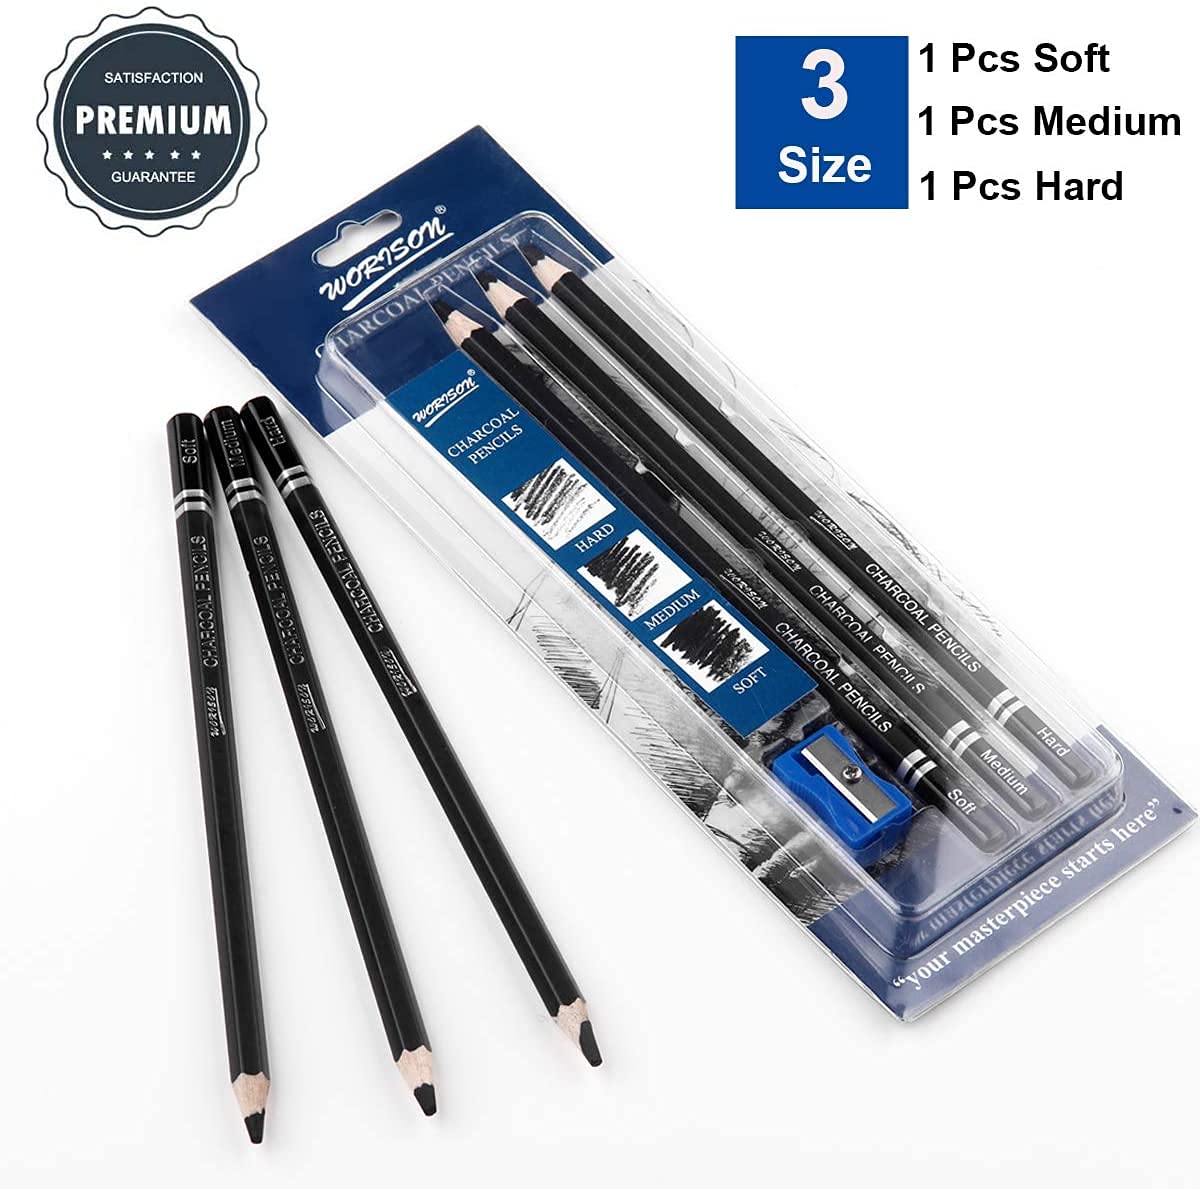 Worison Artist Black Charcoal Pencils Set - 3 Pieces Soft Medium and Hard Drawing Pencils